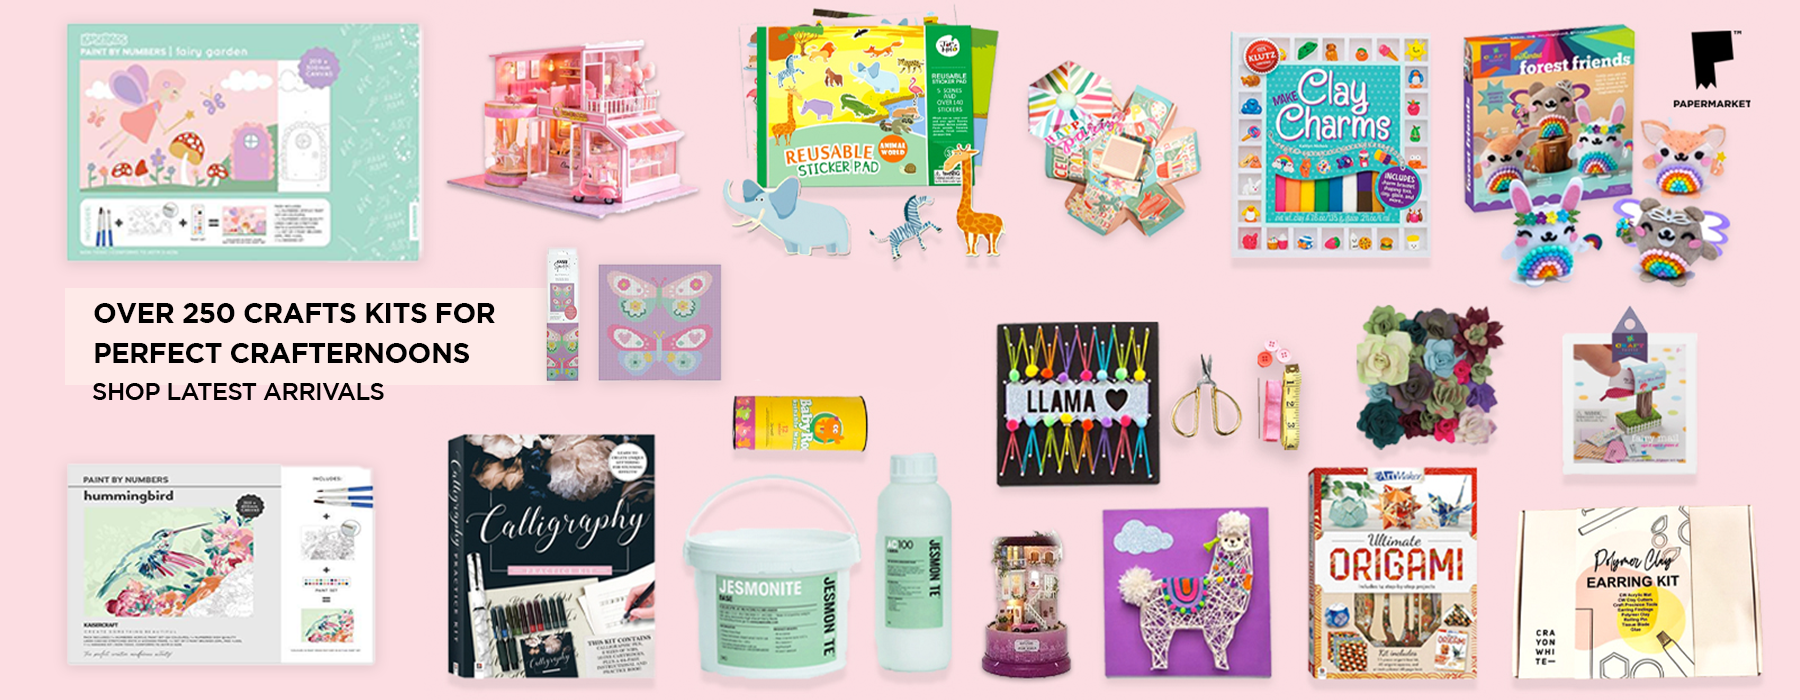 PaperMarket  Best Online Craft Kits, Gifts u0026 Stationery Store